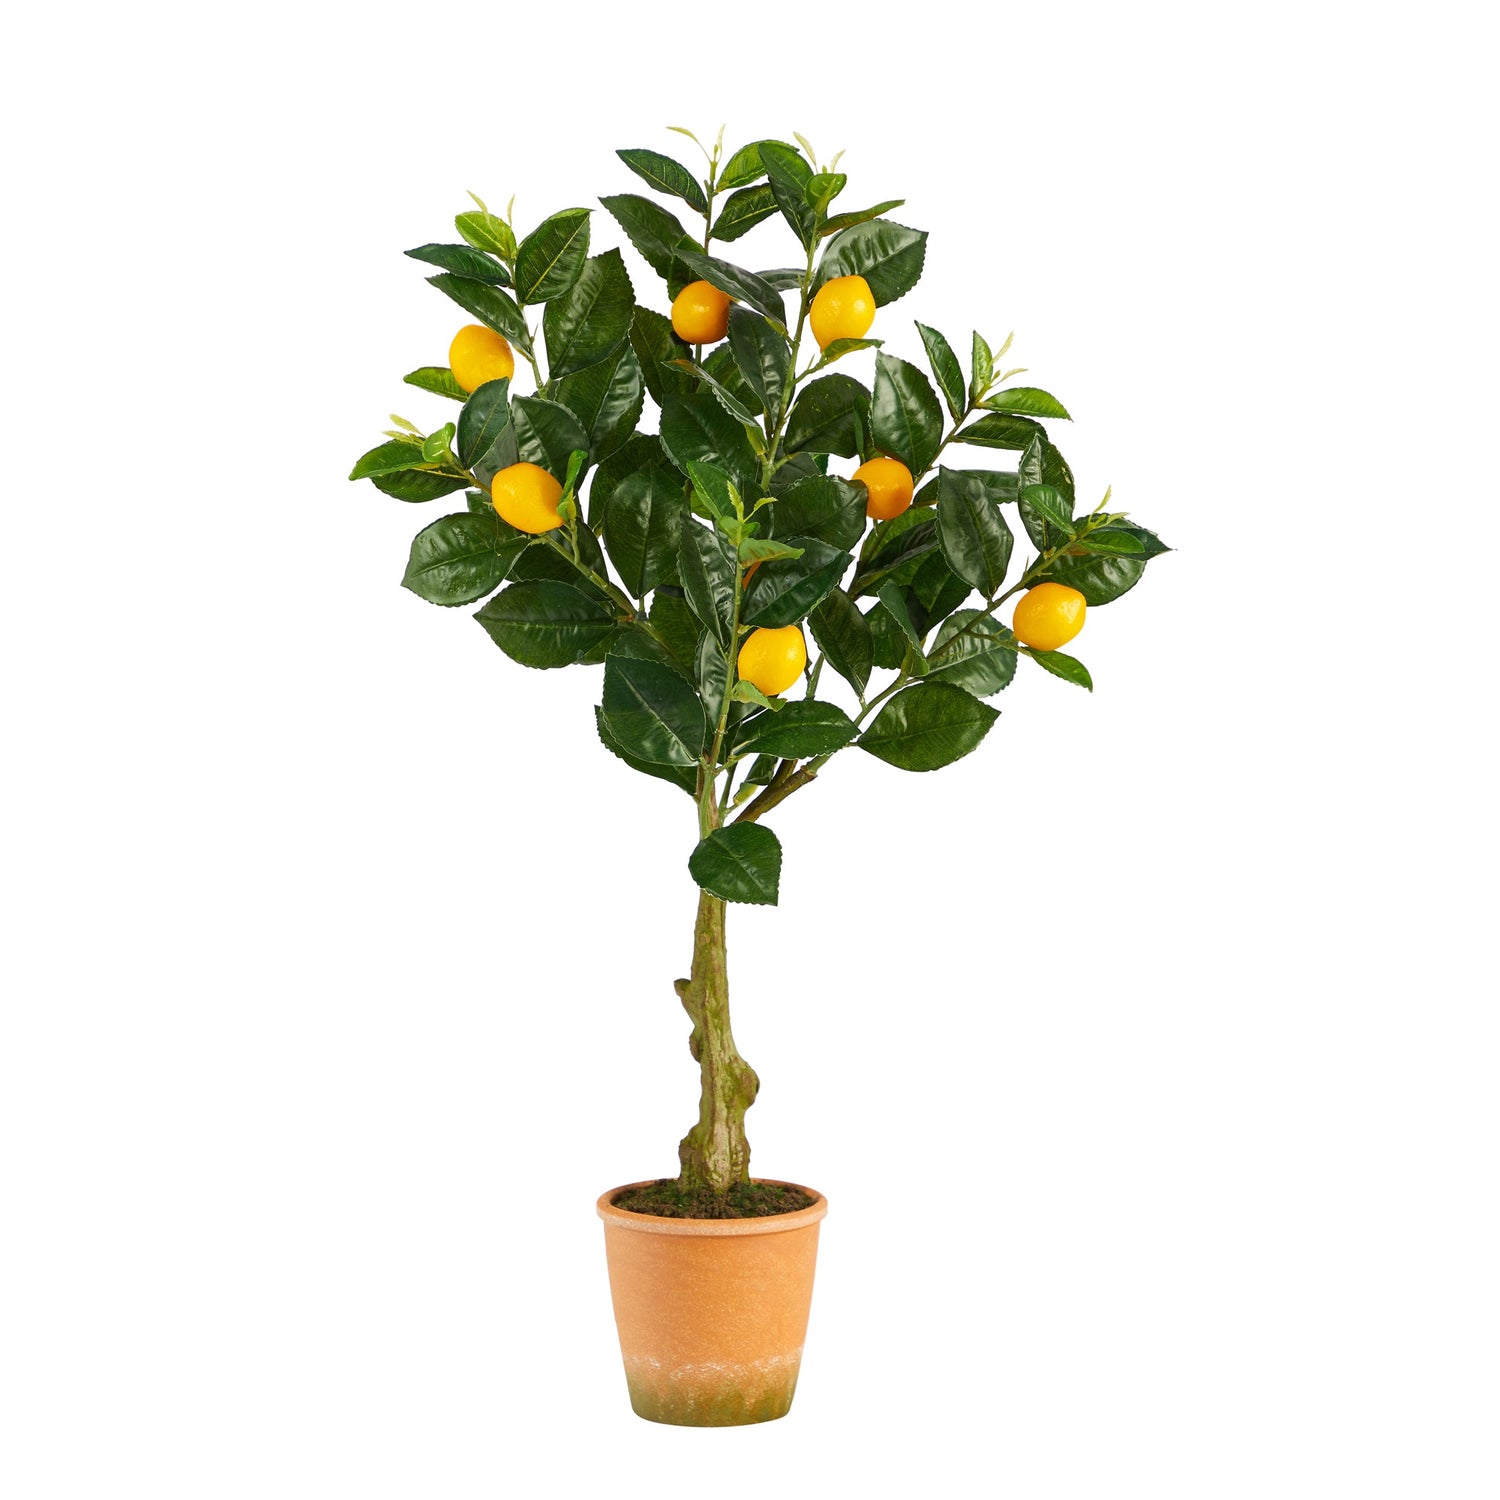 28” Lemon Artificial Tree in Decorative Planter